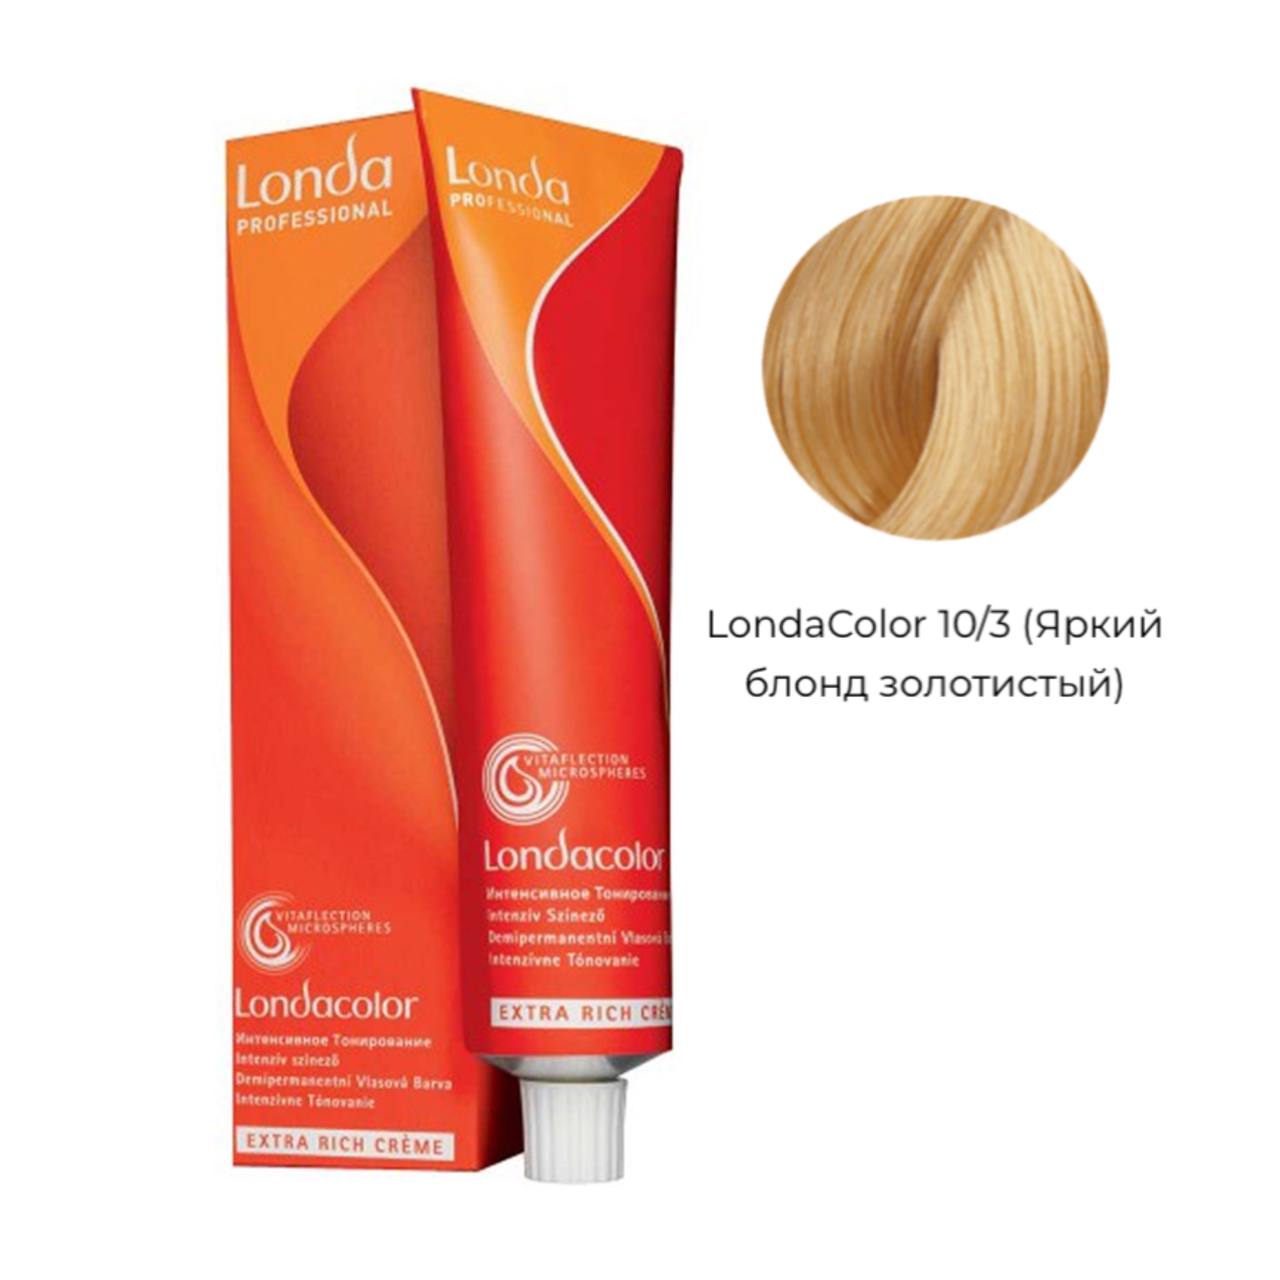 Деми-перманентная крем-краска для волос Яркий блонд золотистый - Londa Professional  Demi Permanent Ammonia Free 10/3, 60ml